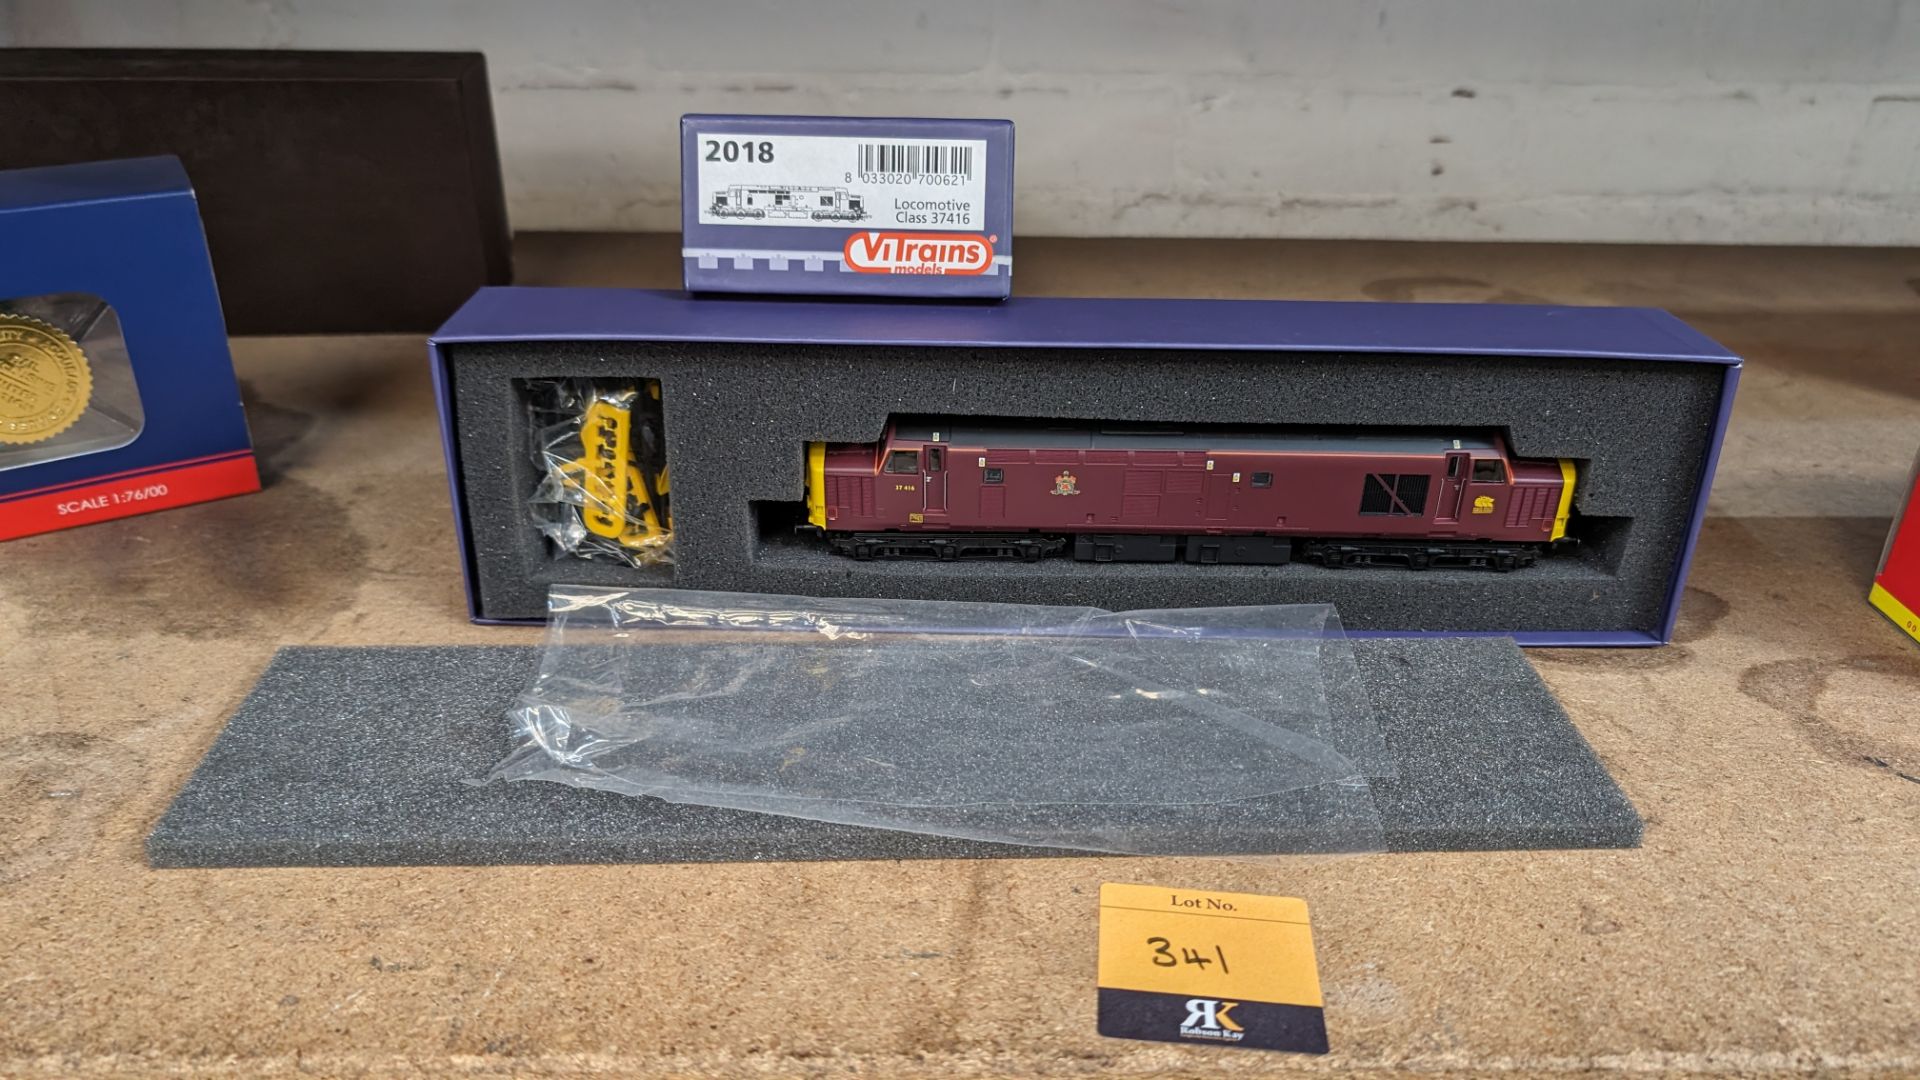 ViTrains Locomotive Class 37416 00 model train (2018)